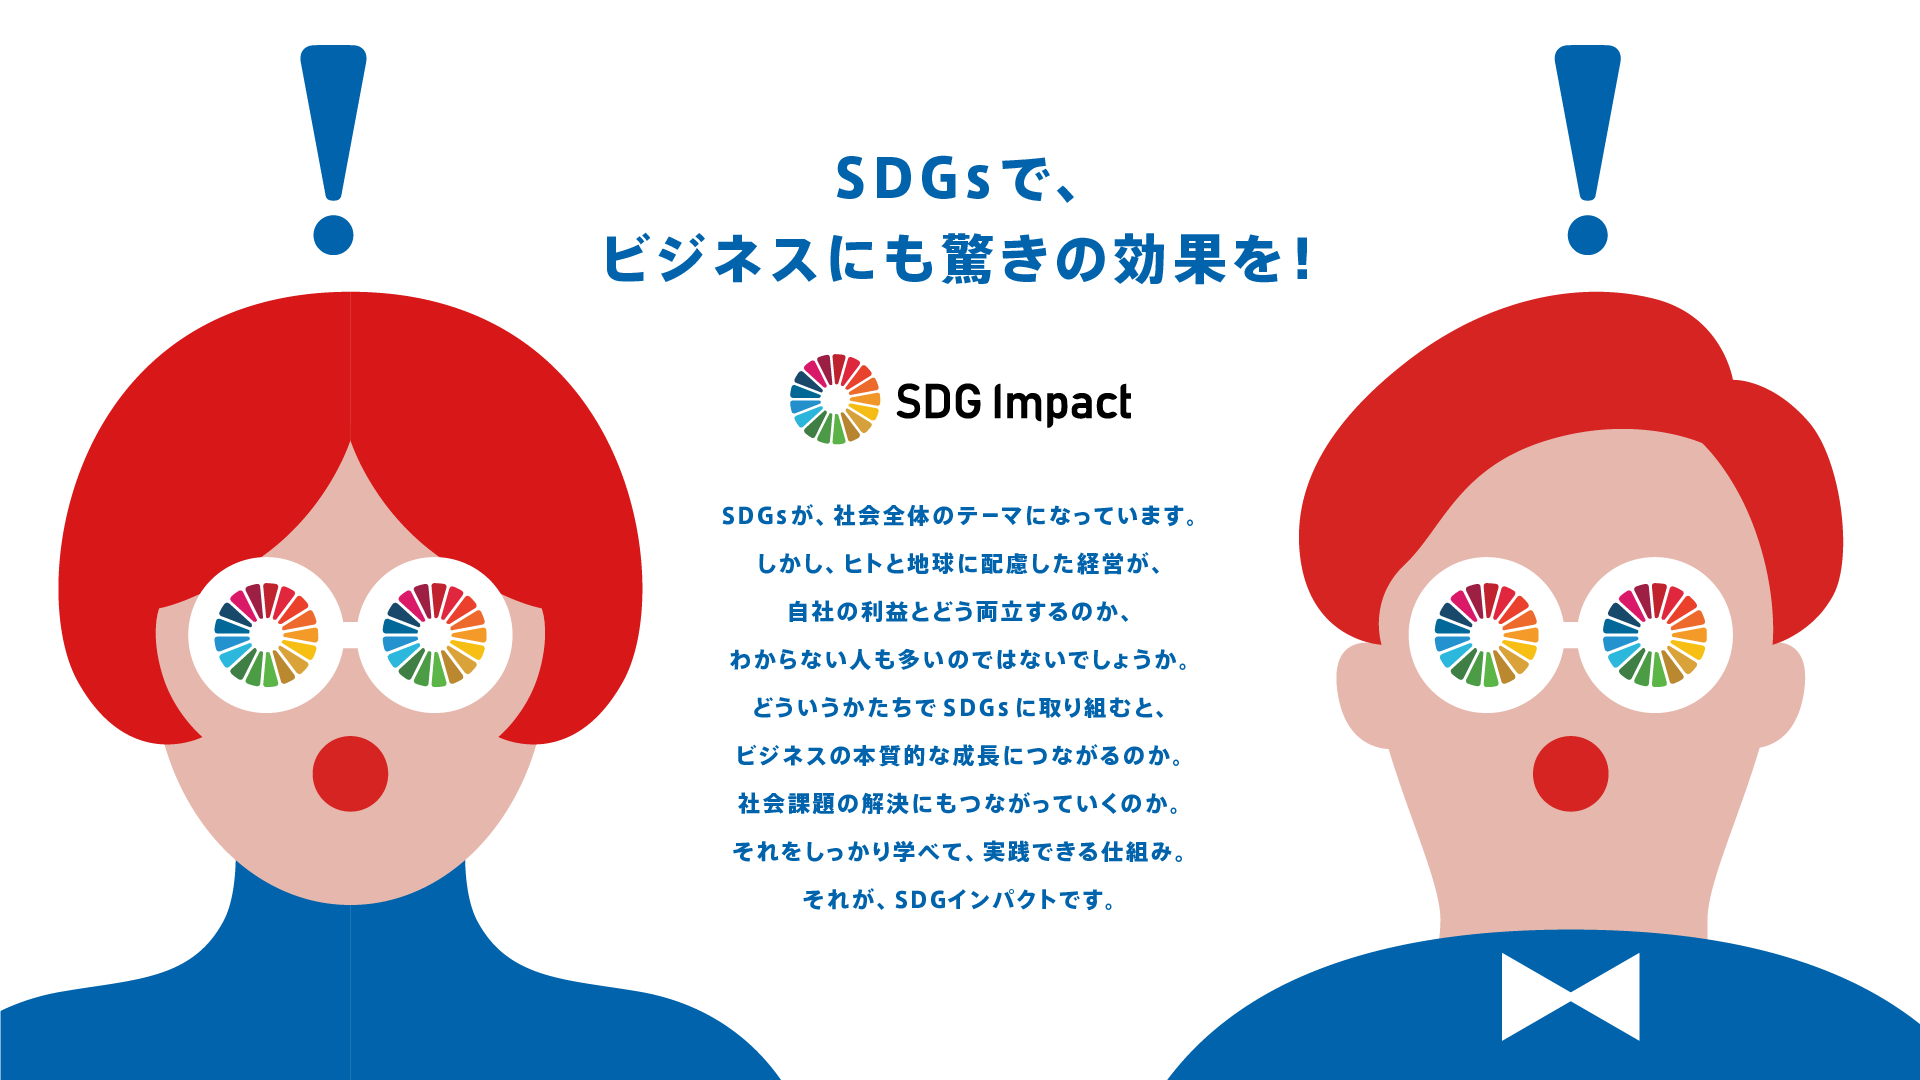 sdg impact special website